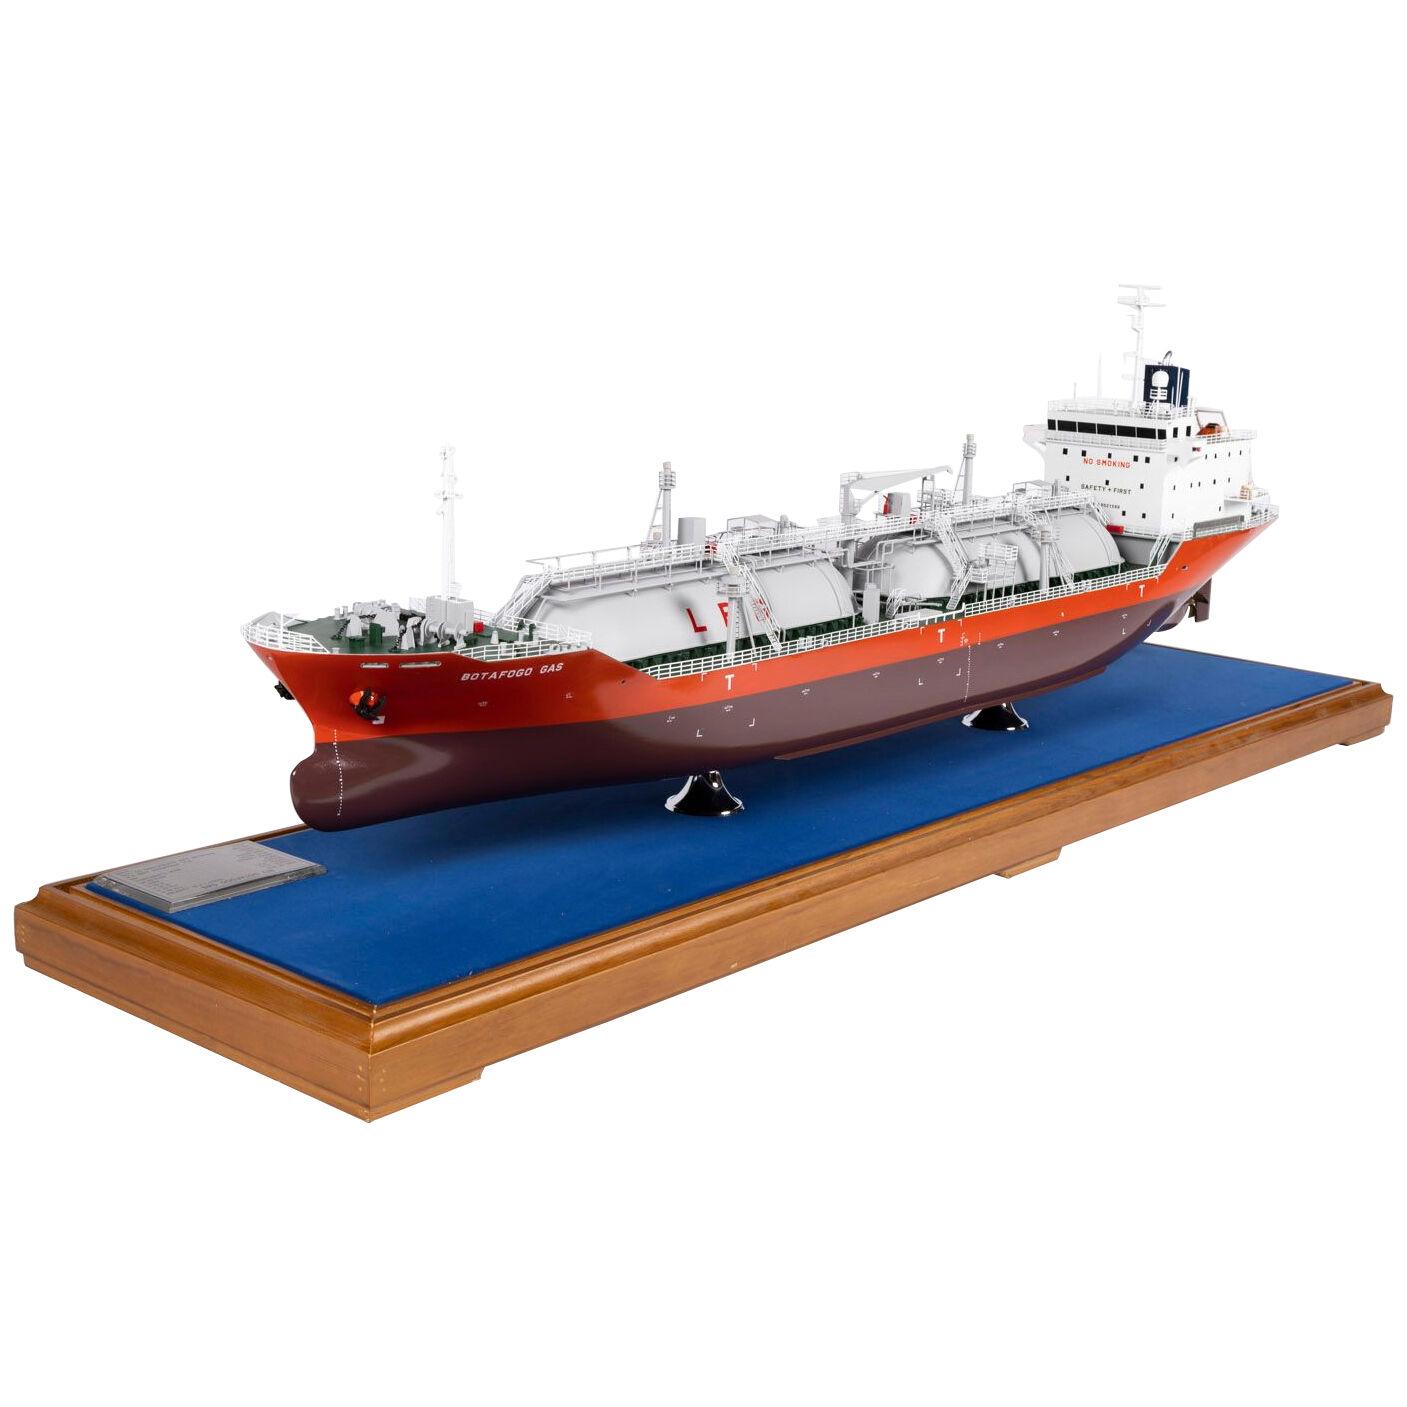 Shipbuilder's model of the LPG carrier Botafogo Gas